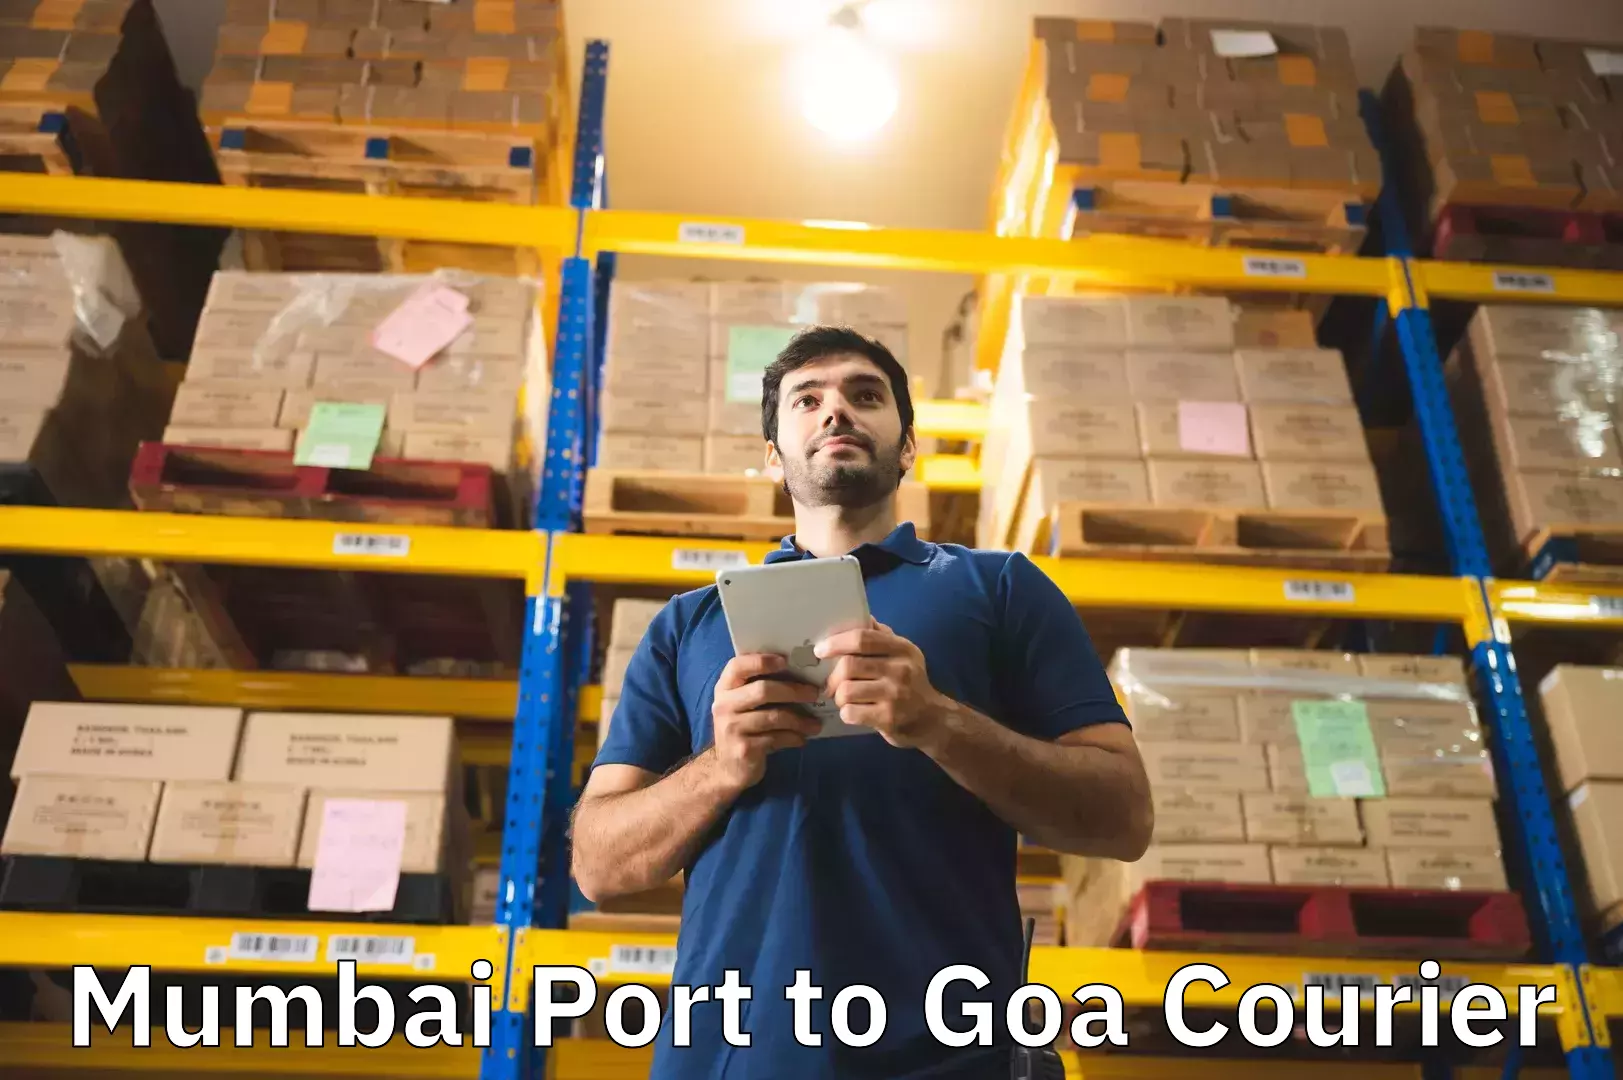 Luggage transport deals Mumbai Port to Goa